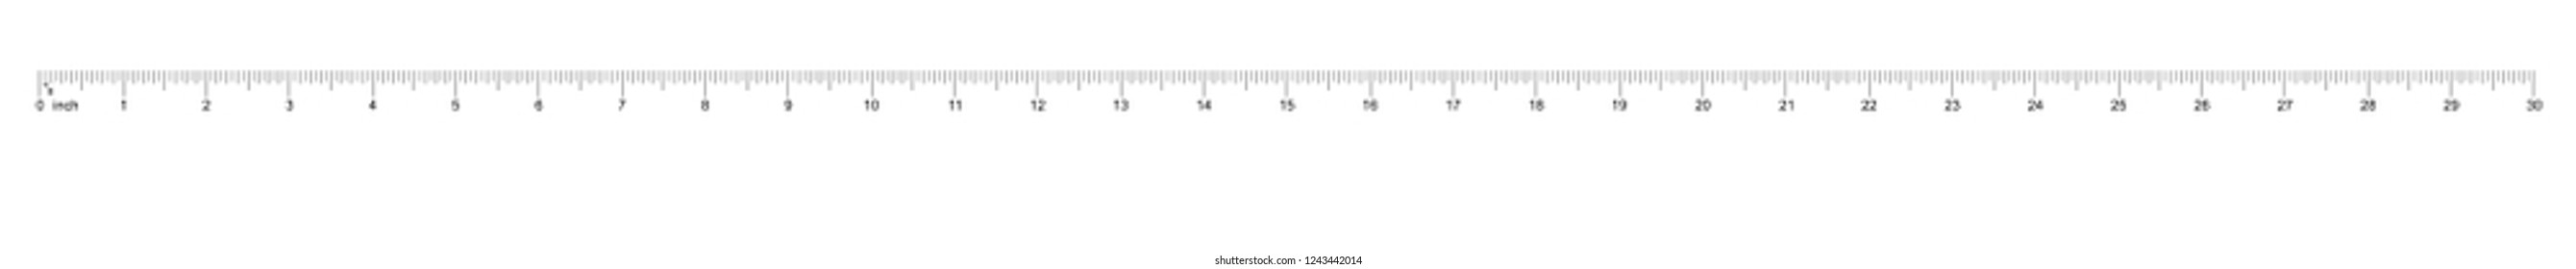 52,137 Inch ruler Images, Stock Photos & Vectors | Shutterstock